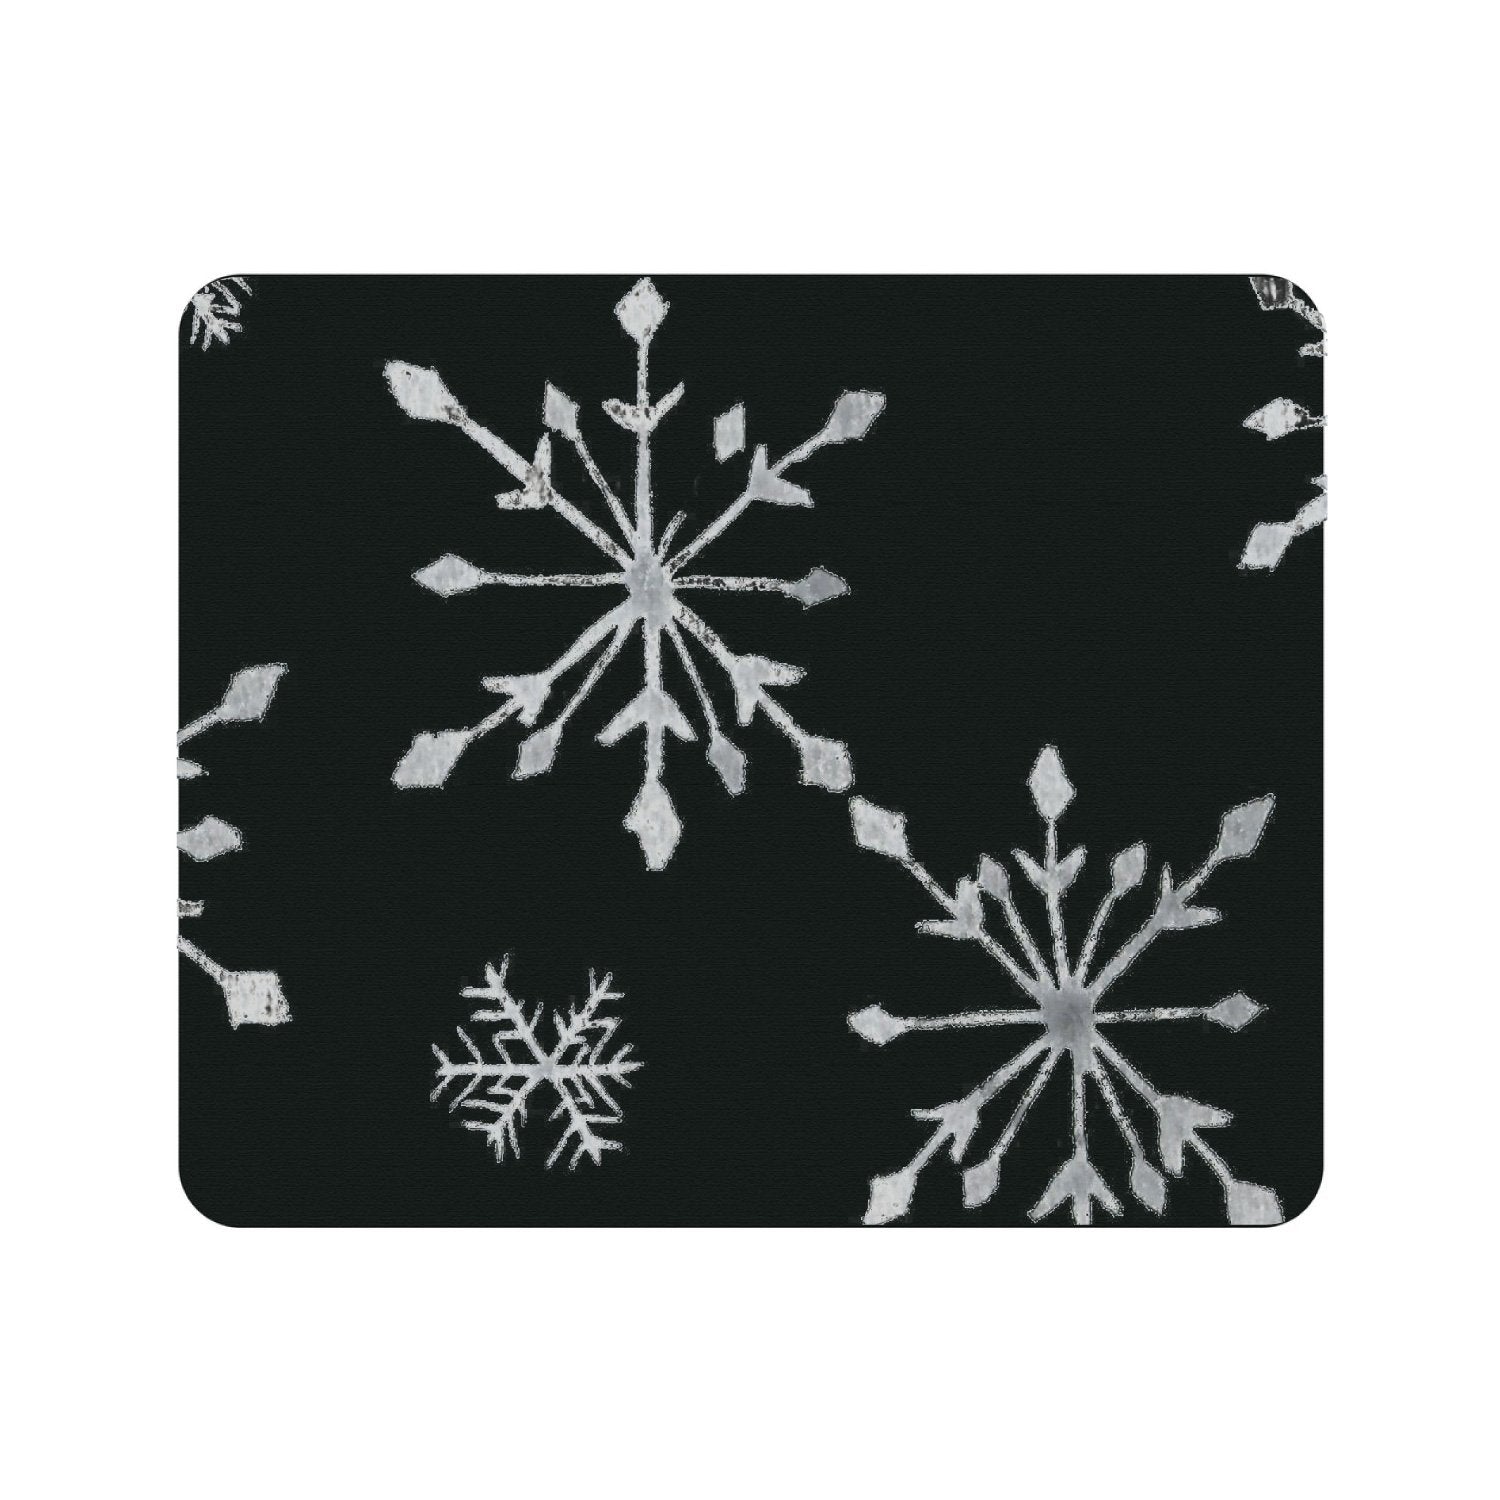 OTM Prints Black Mouse Pad, Snowfall